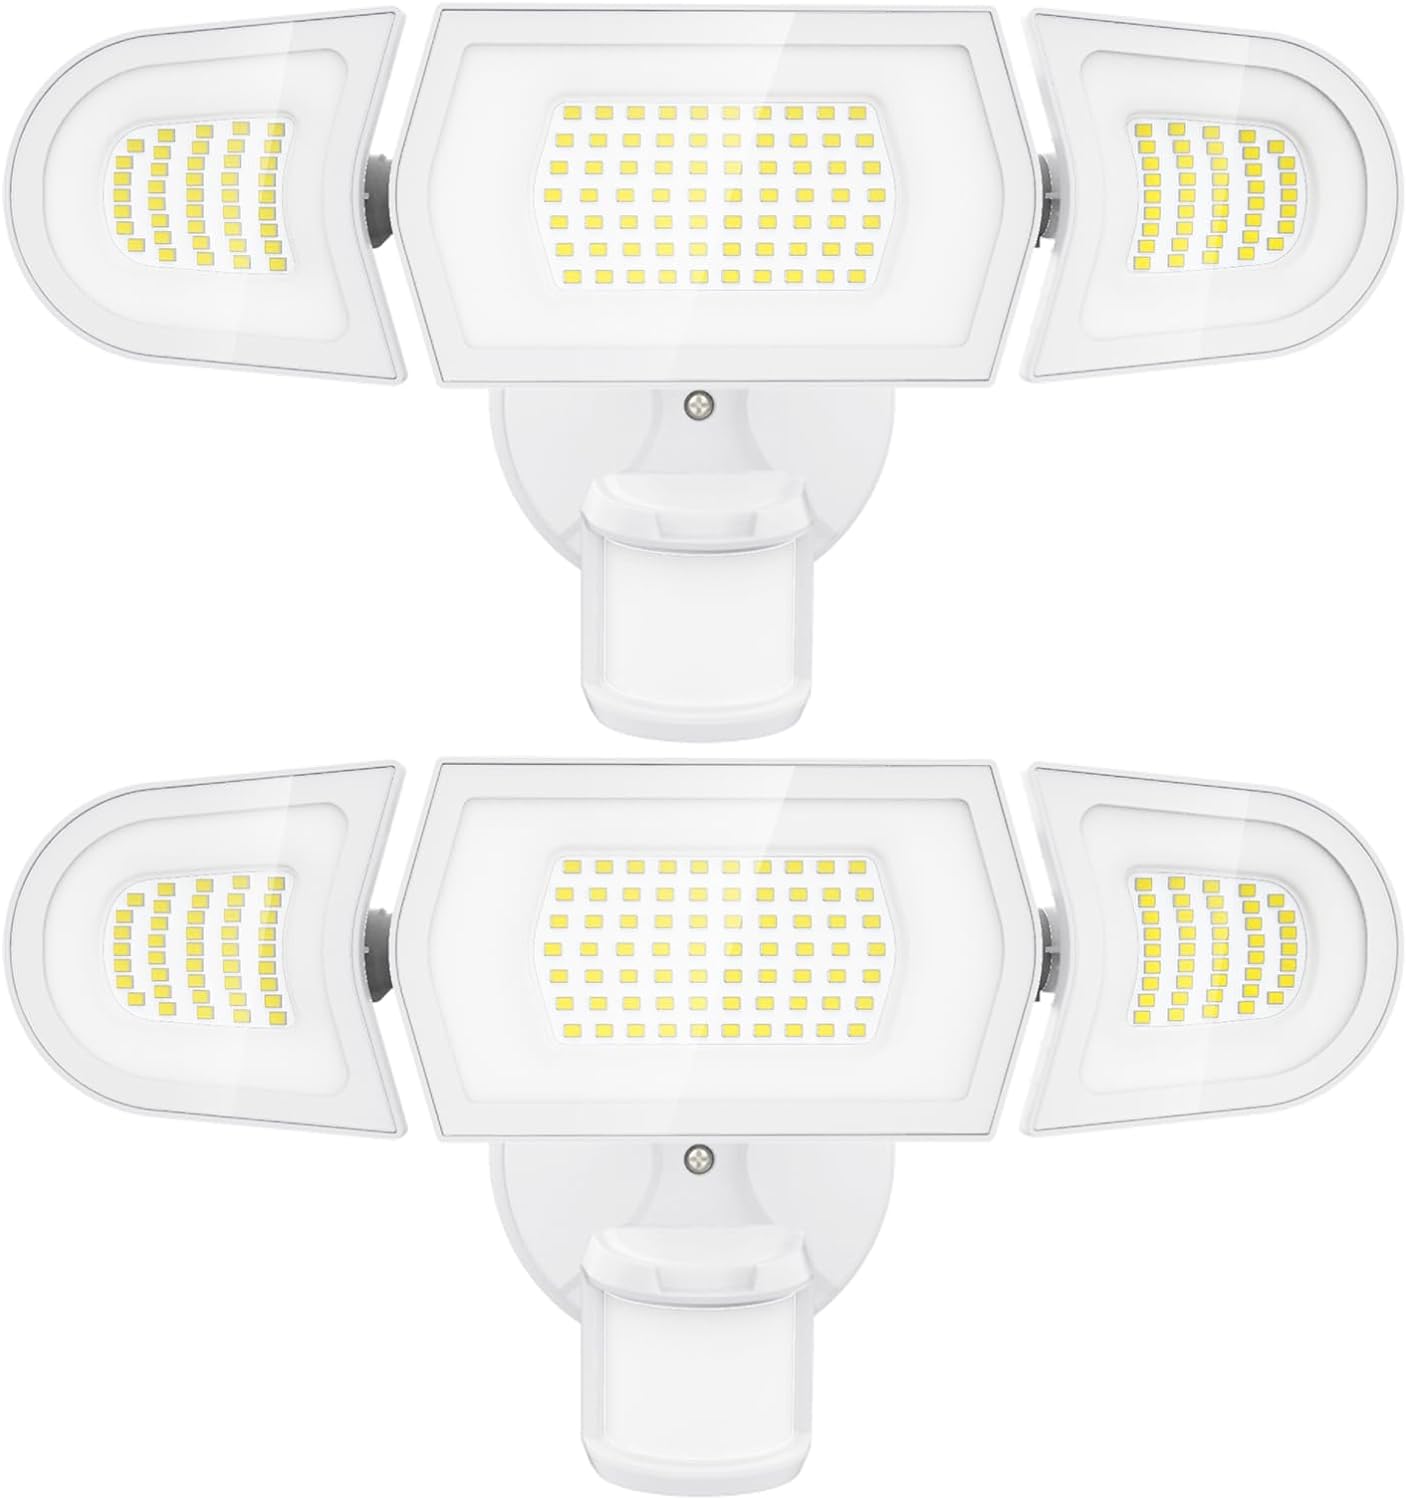 100W LED Security Light Motion Sensor Outdoor White Light, 2 Pack, 9000LM Super Bright